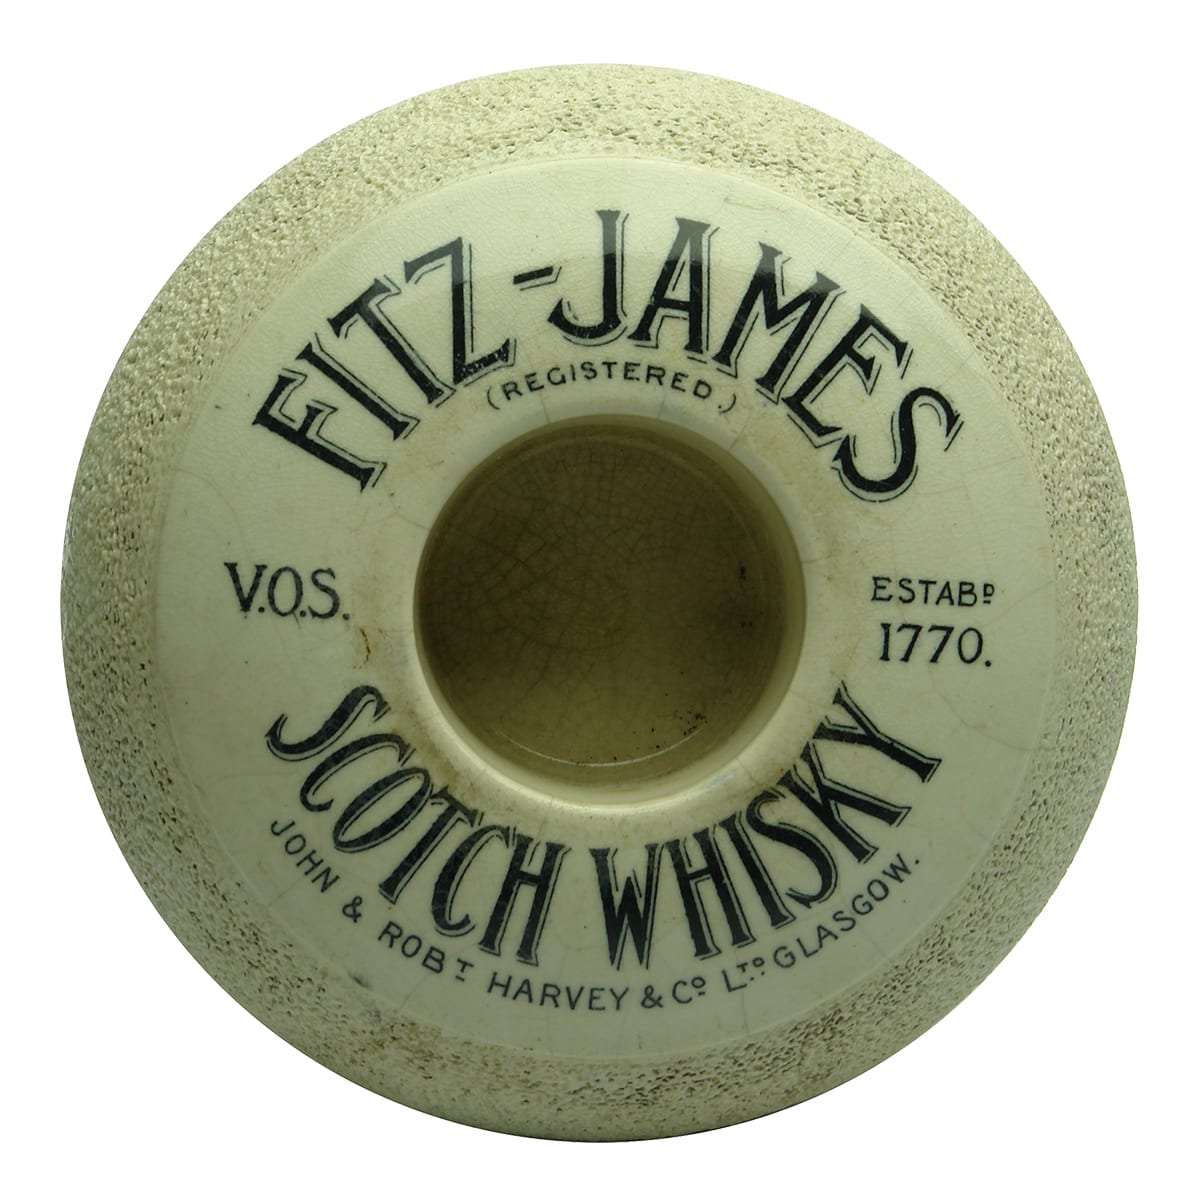 Advertising Match Striker. Fitz-James Scotch Whisky.